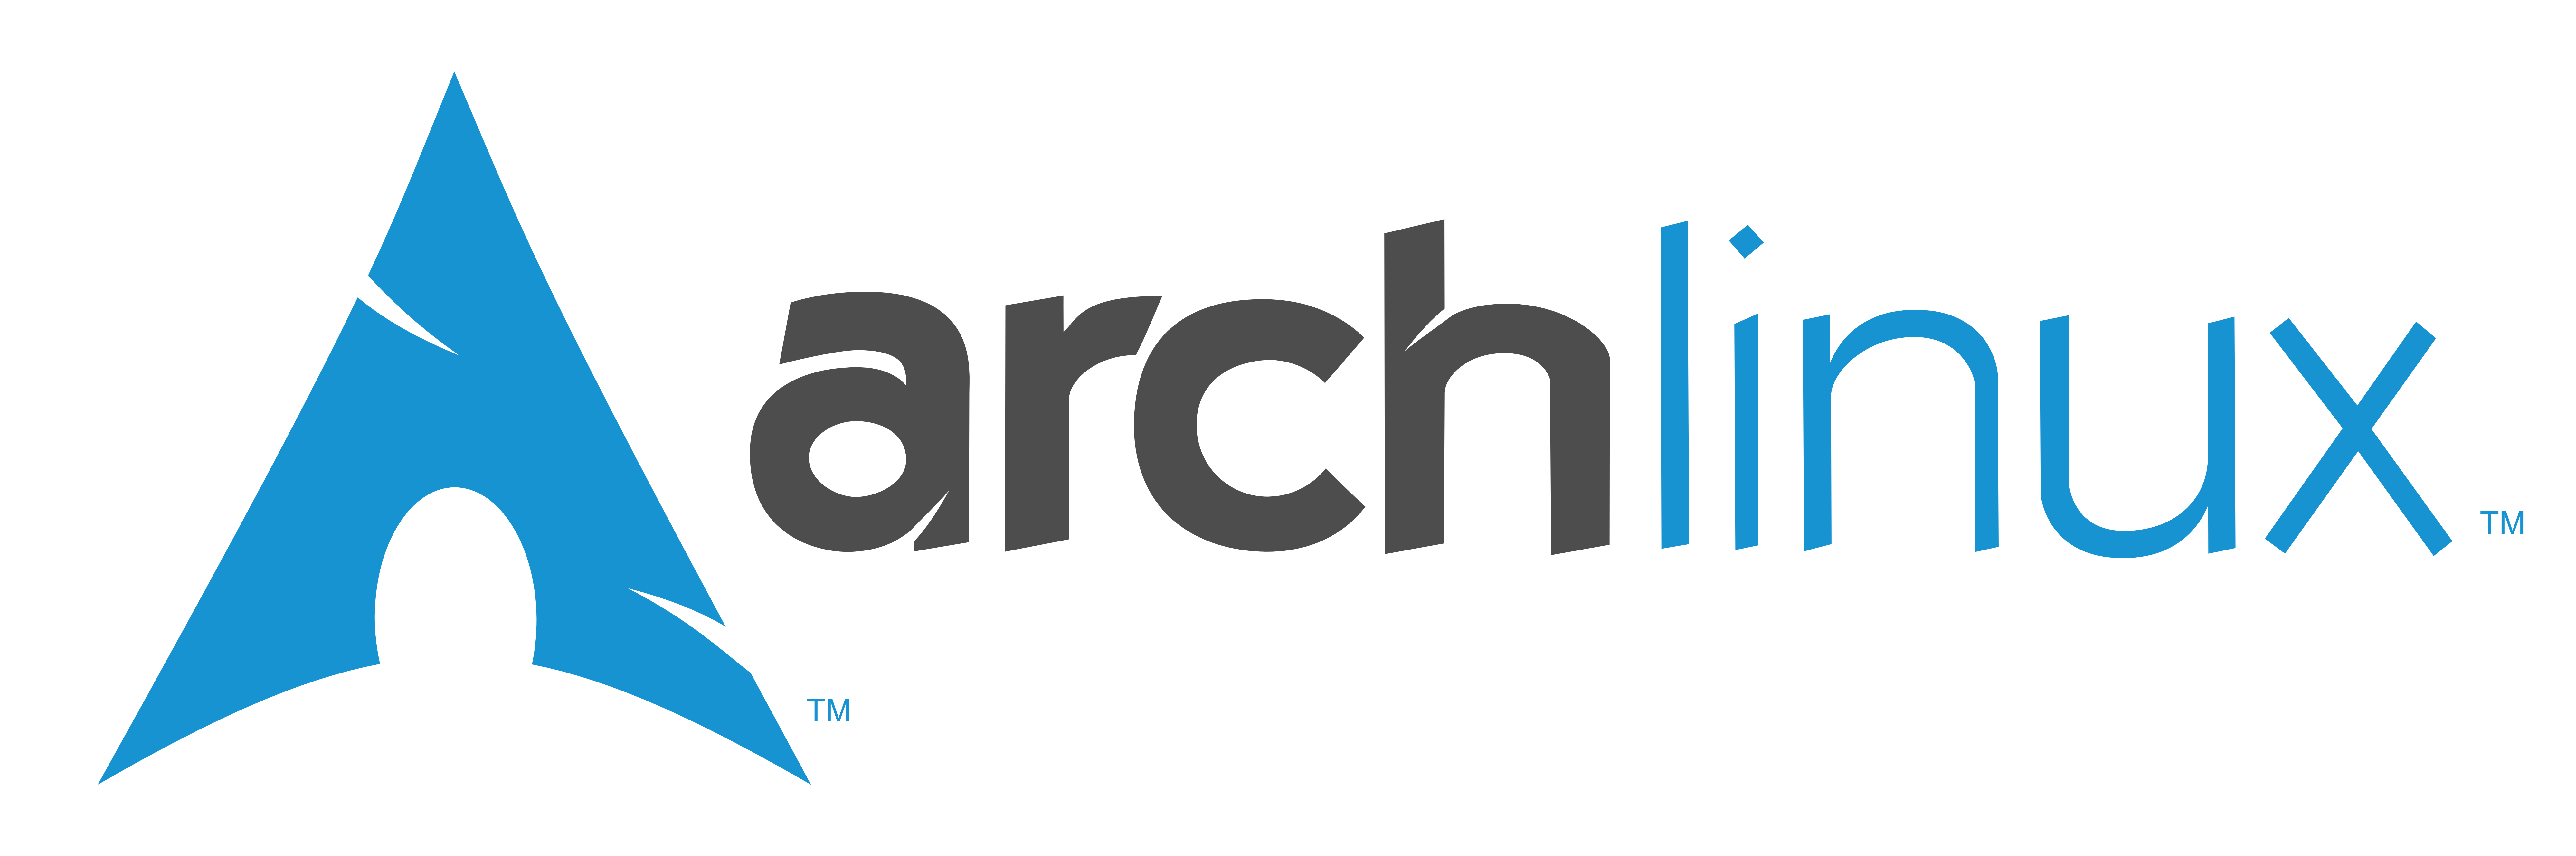 archlinux-logo-dark-1200dpi.b42bd35d5916.png